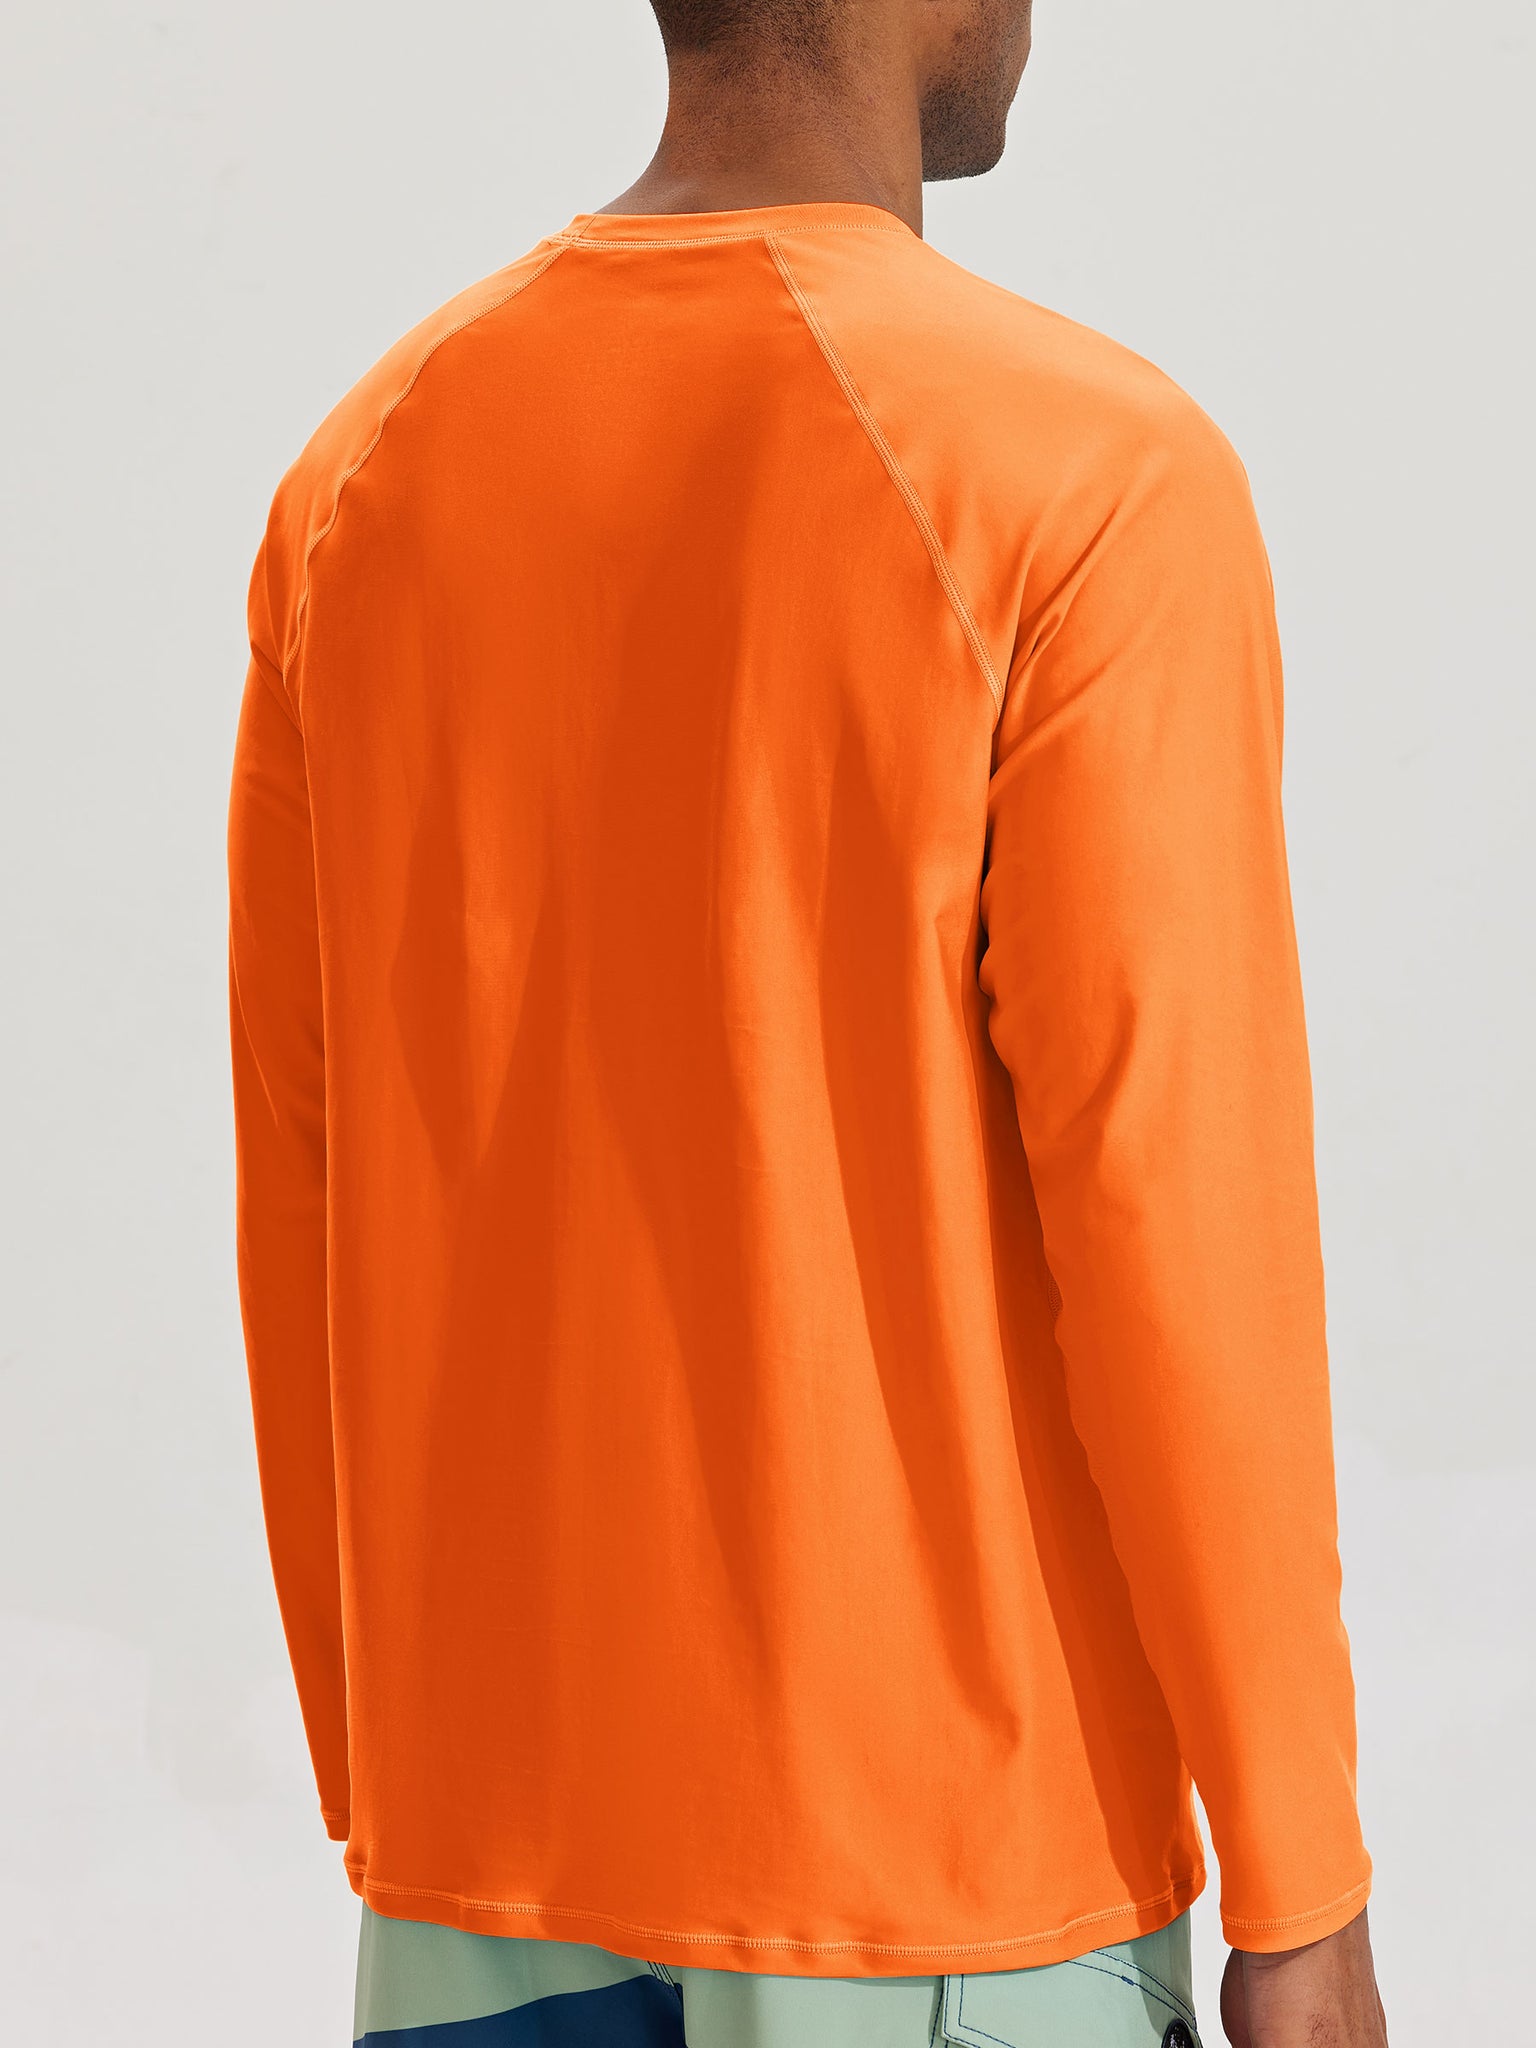 Men's Sun Protection Long Sleeve Shirt_Orange_model3